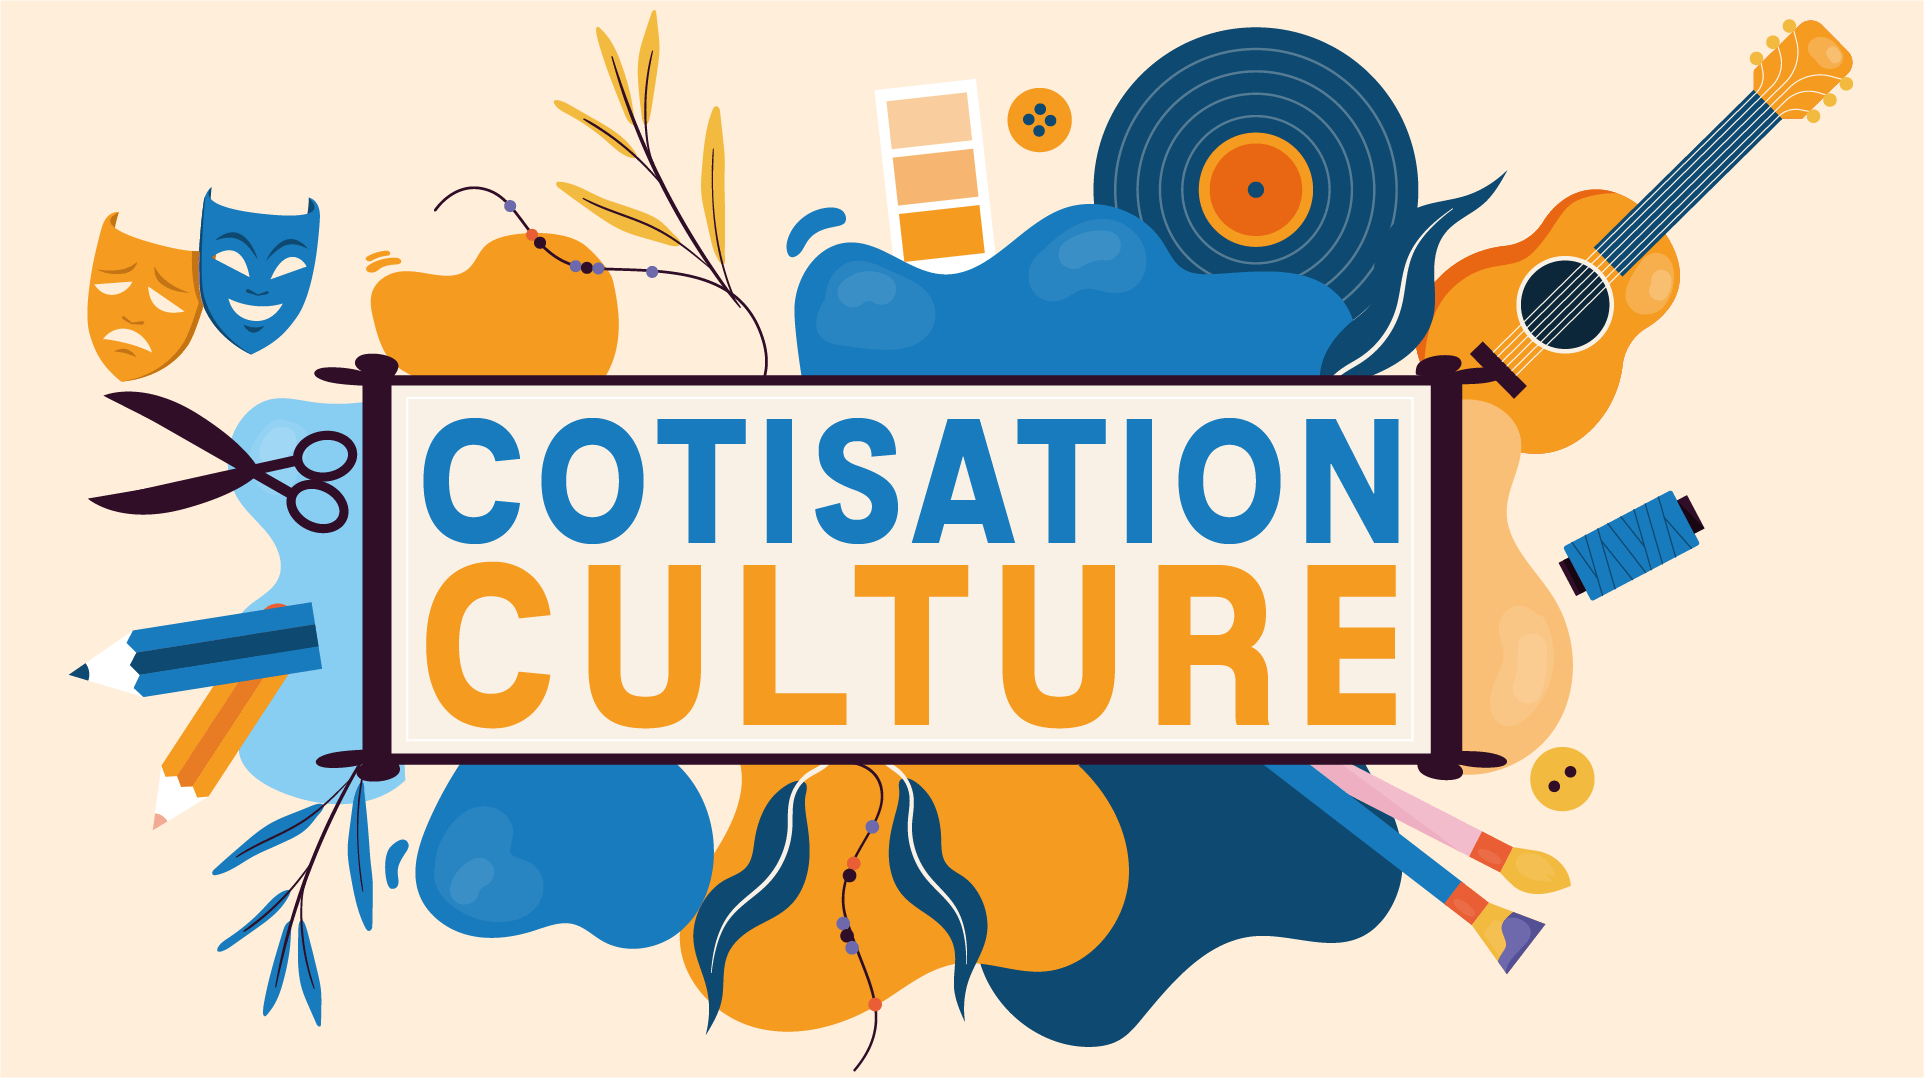 Cotisation culture